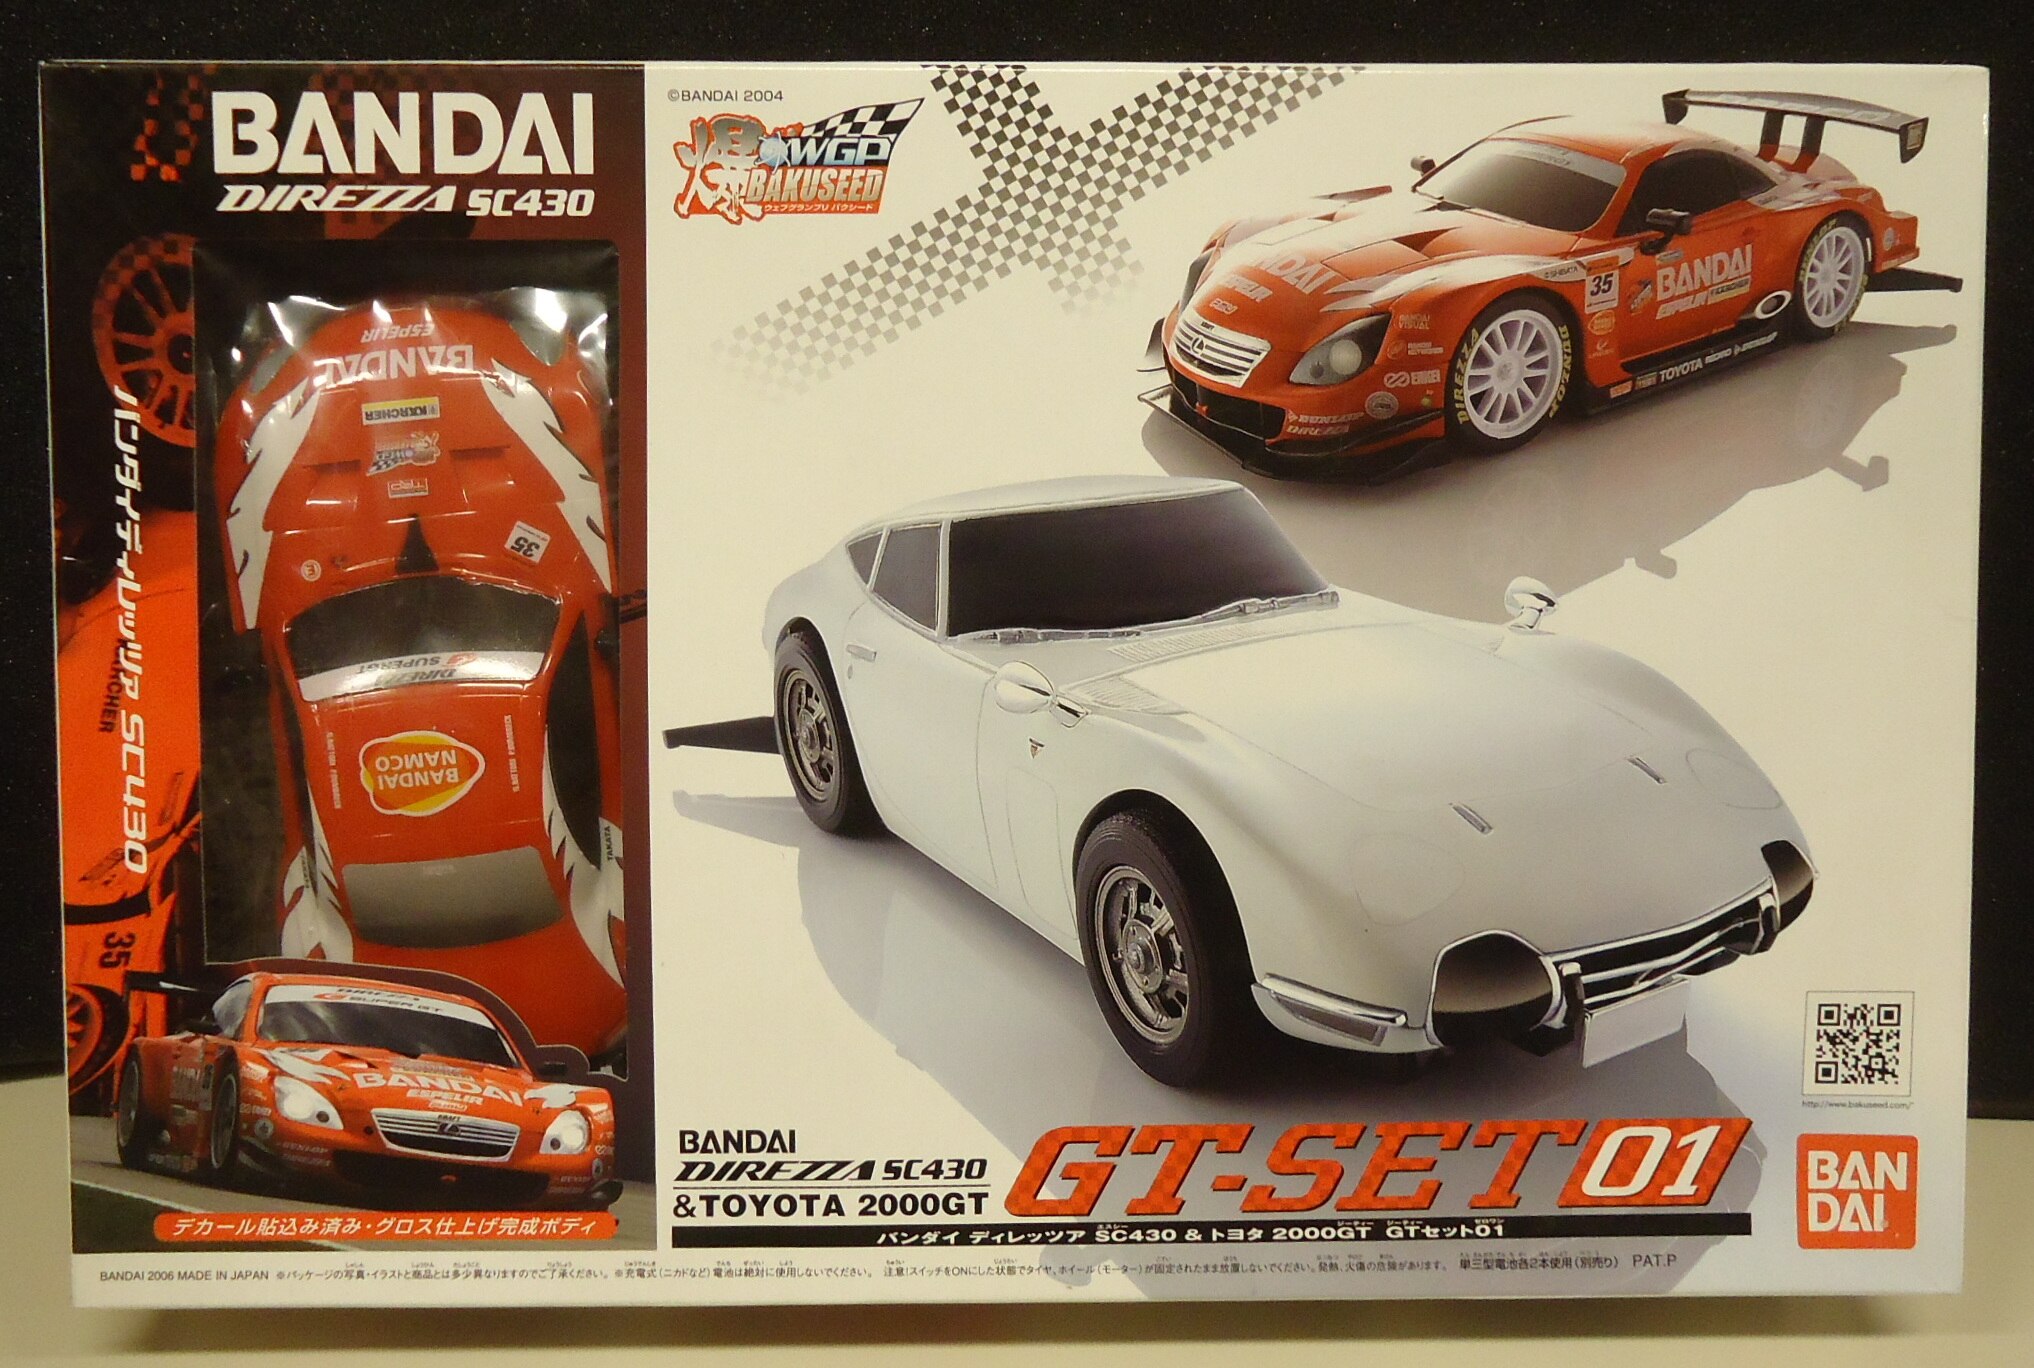 Bandai WGP BAKUSEED Direzza SC430 and Toyota 2000GT GT set 01/WGP